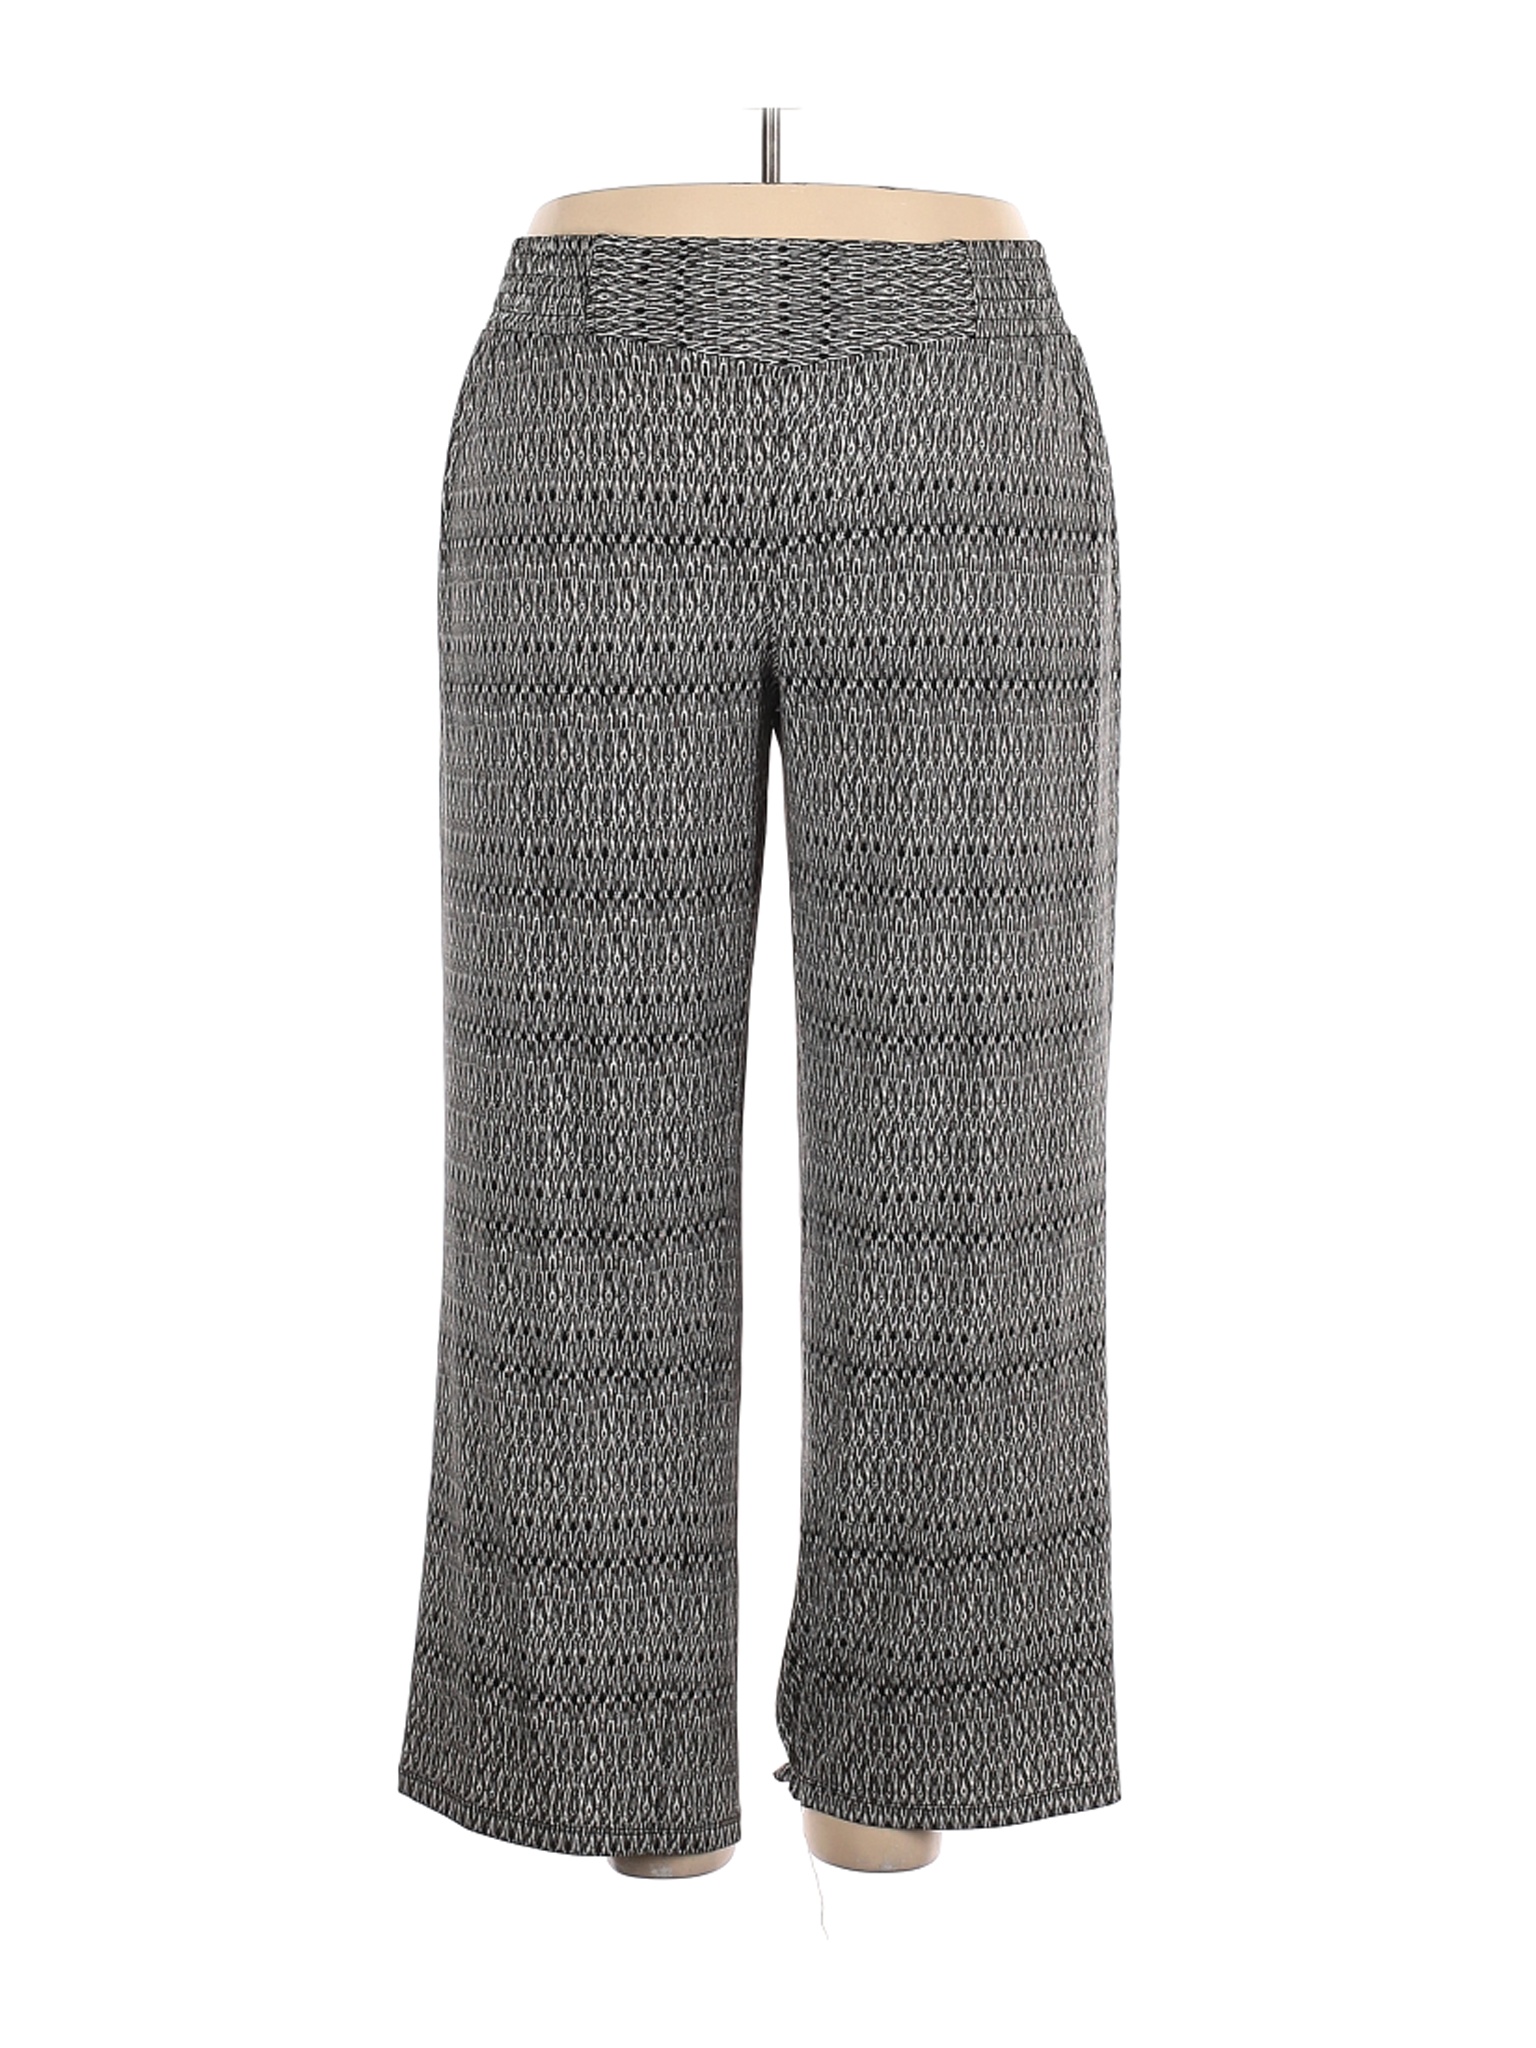 Premise Studio Women Gray Casual Pants 3X Plus | eBay